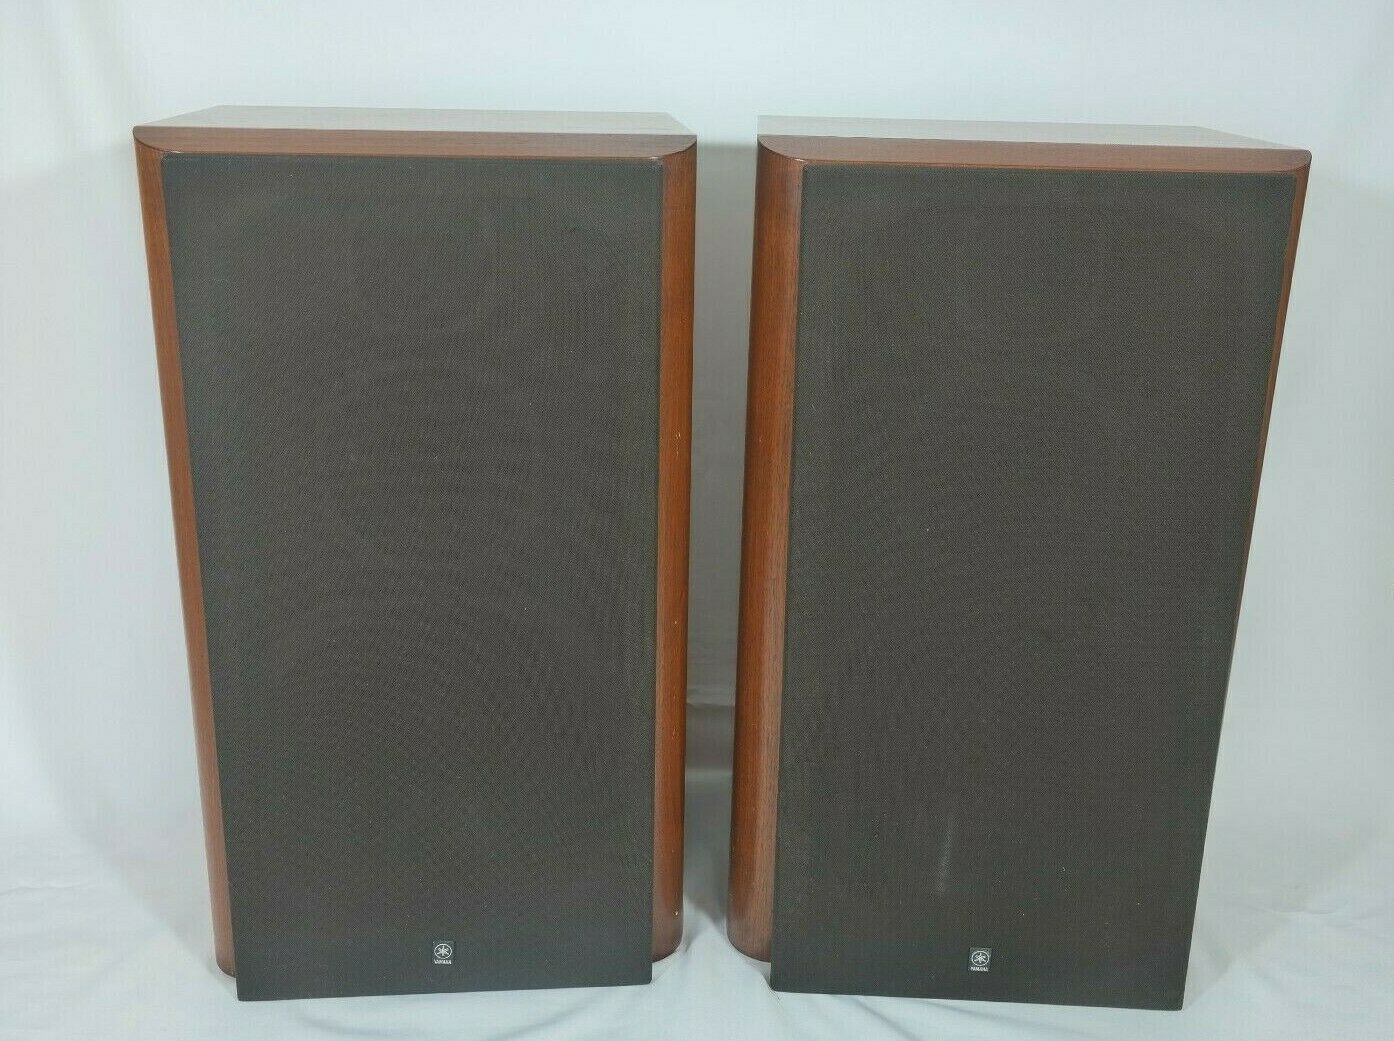 Yamaha NS-2000 Speakers